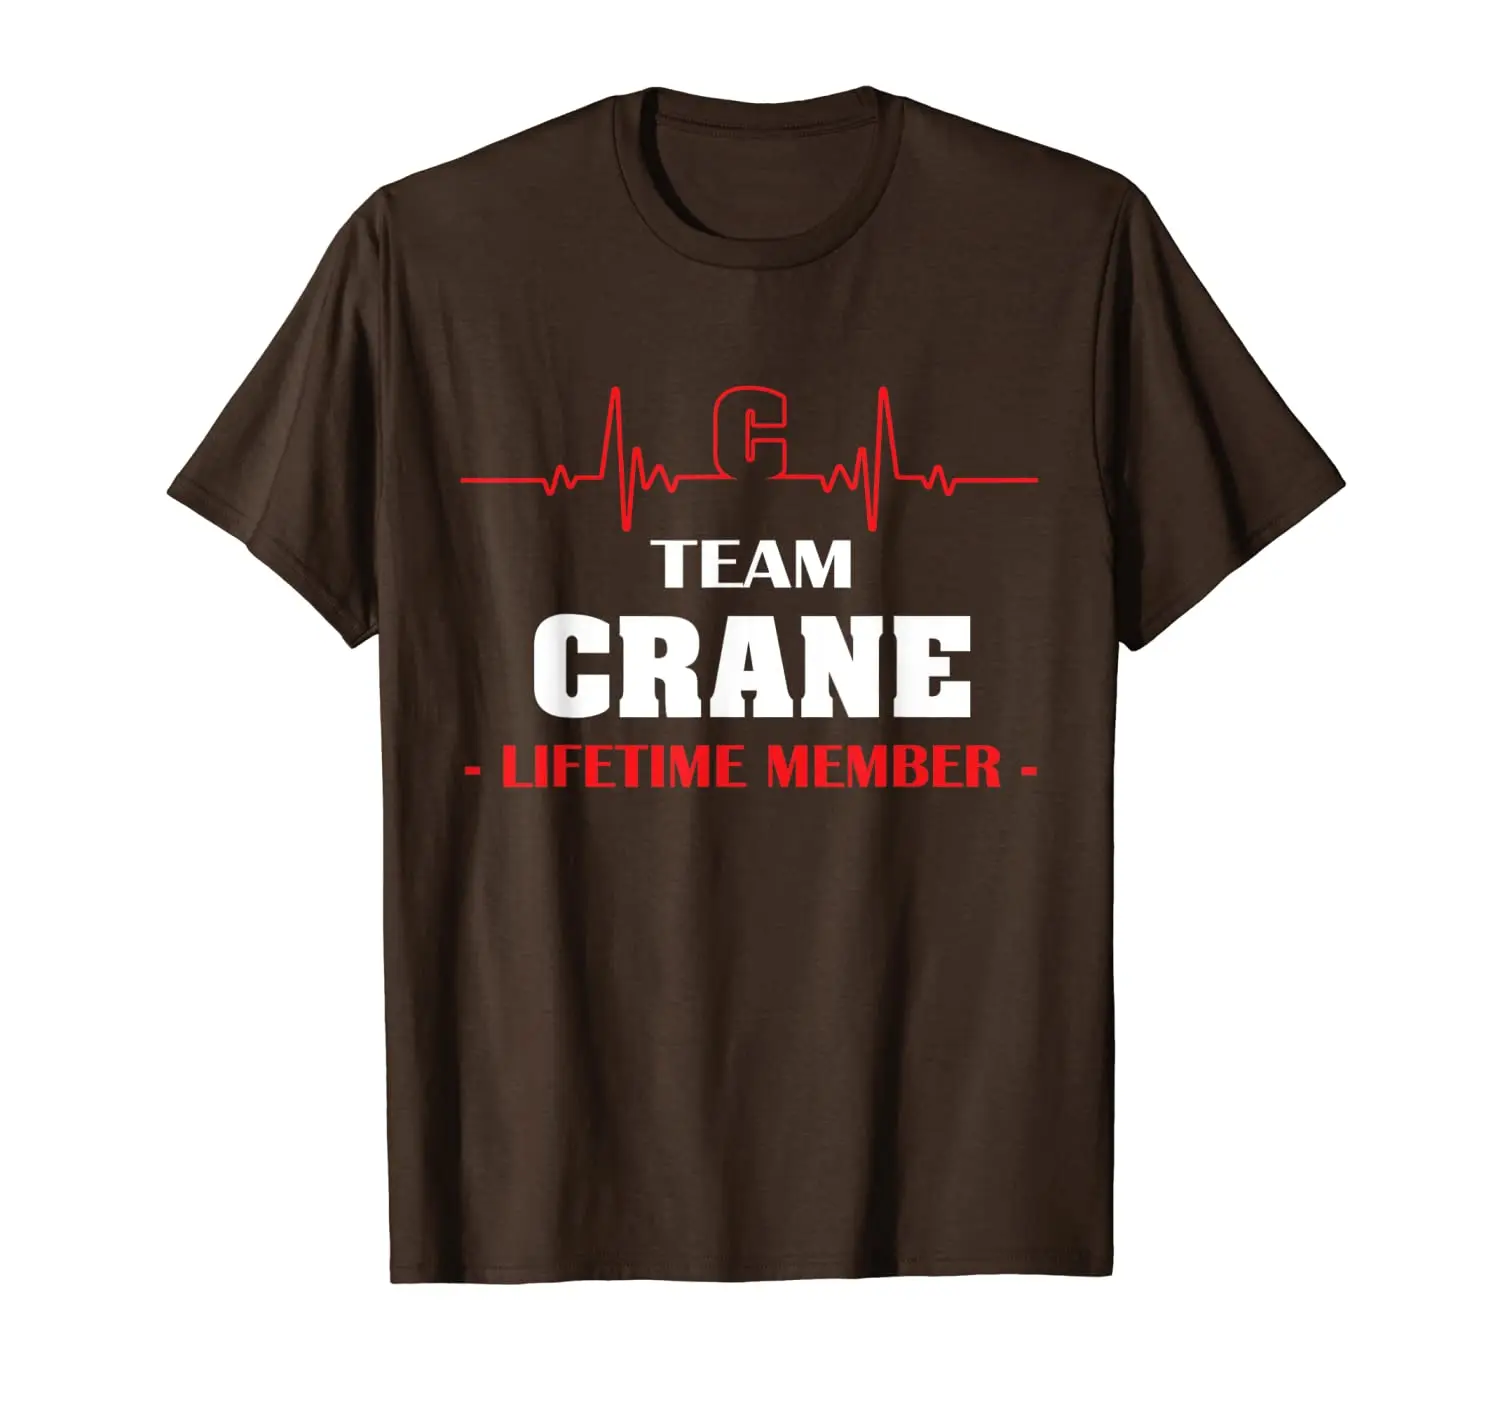 

Team CRANE lifetime member family youth kid shirt hearbeat